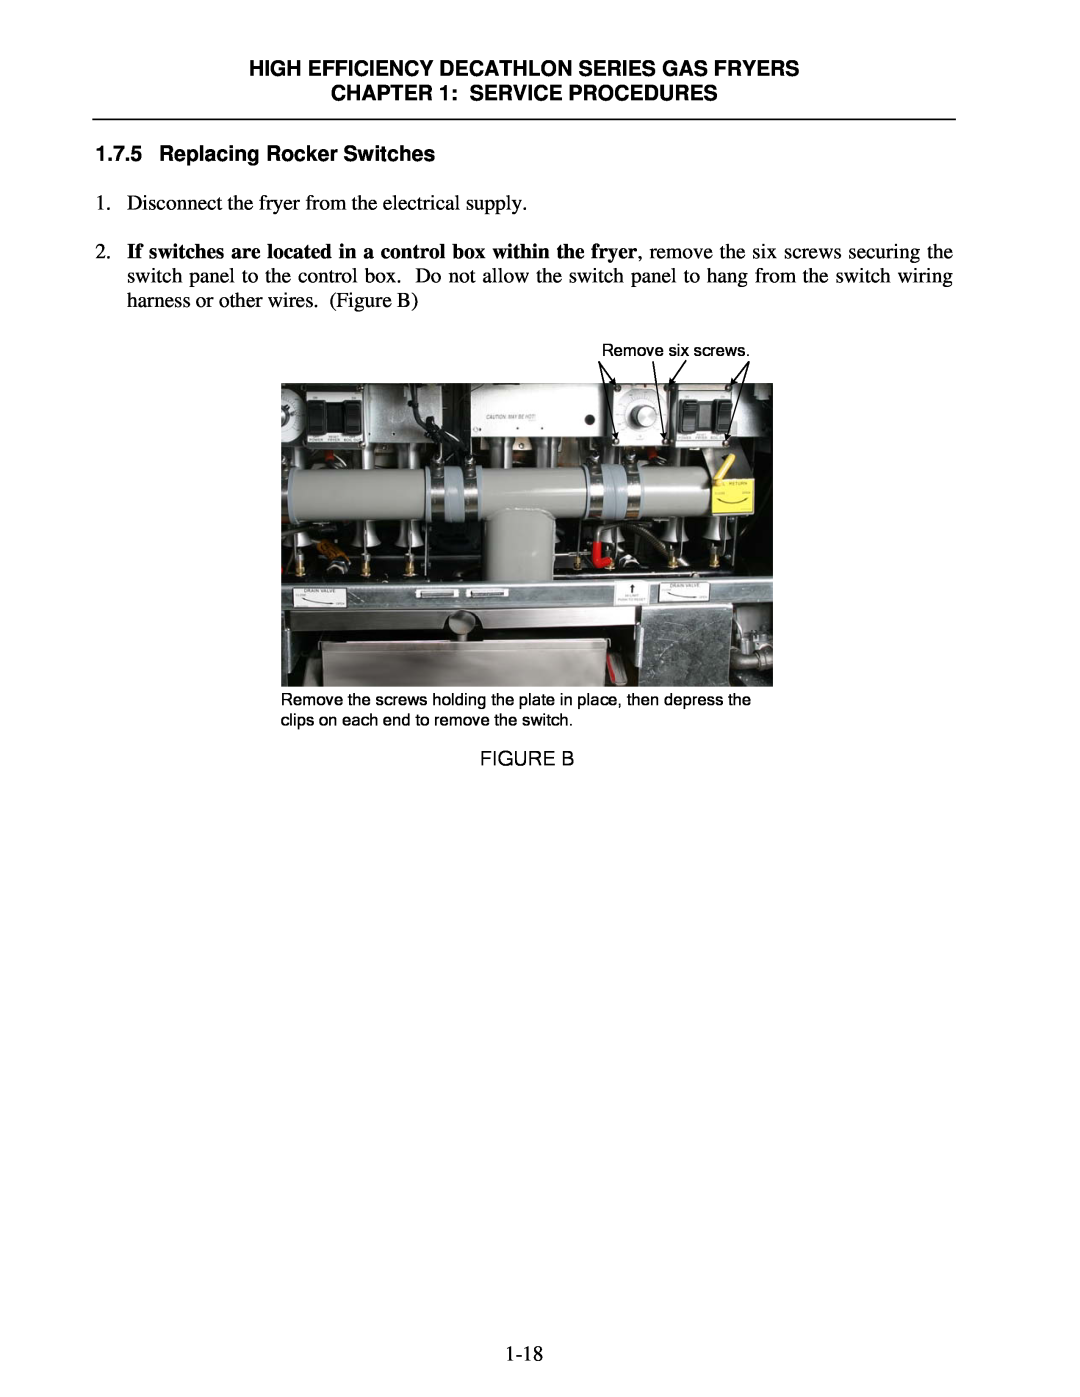 Frymaster FPHD manual Replacing Rocker Switches, High Efficiency Decathlon Series Gas Fryers, Service Procedures, 1-18 